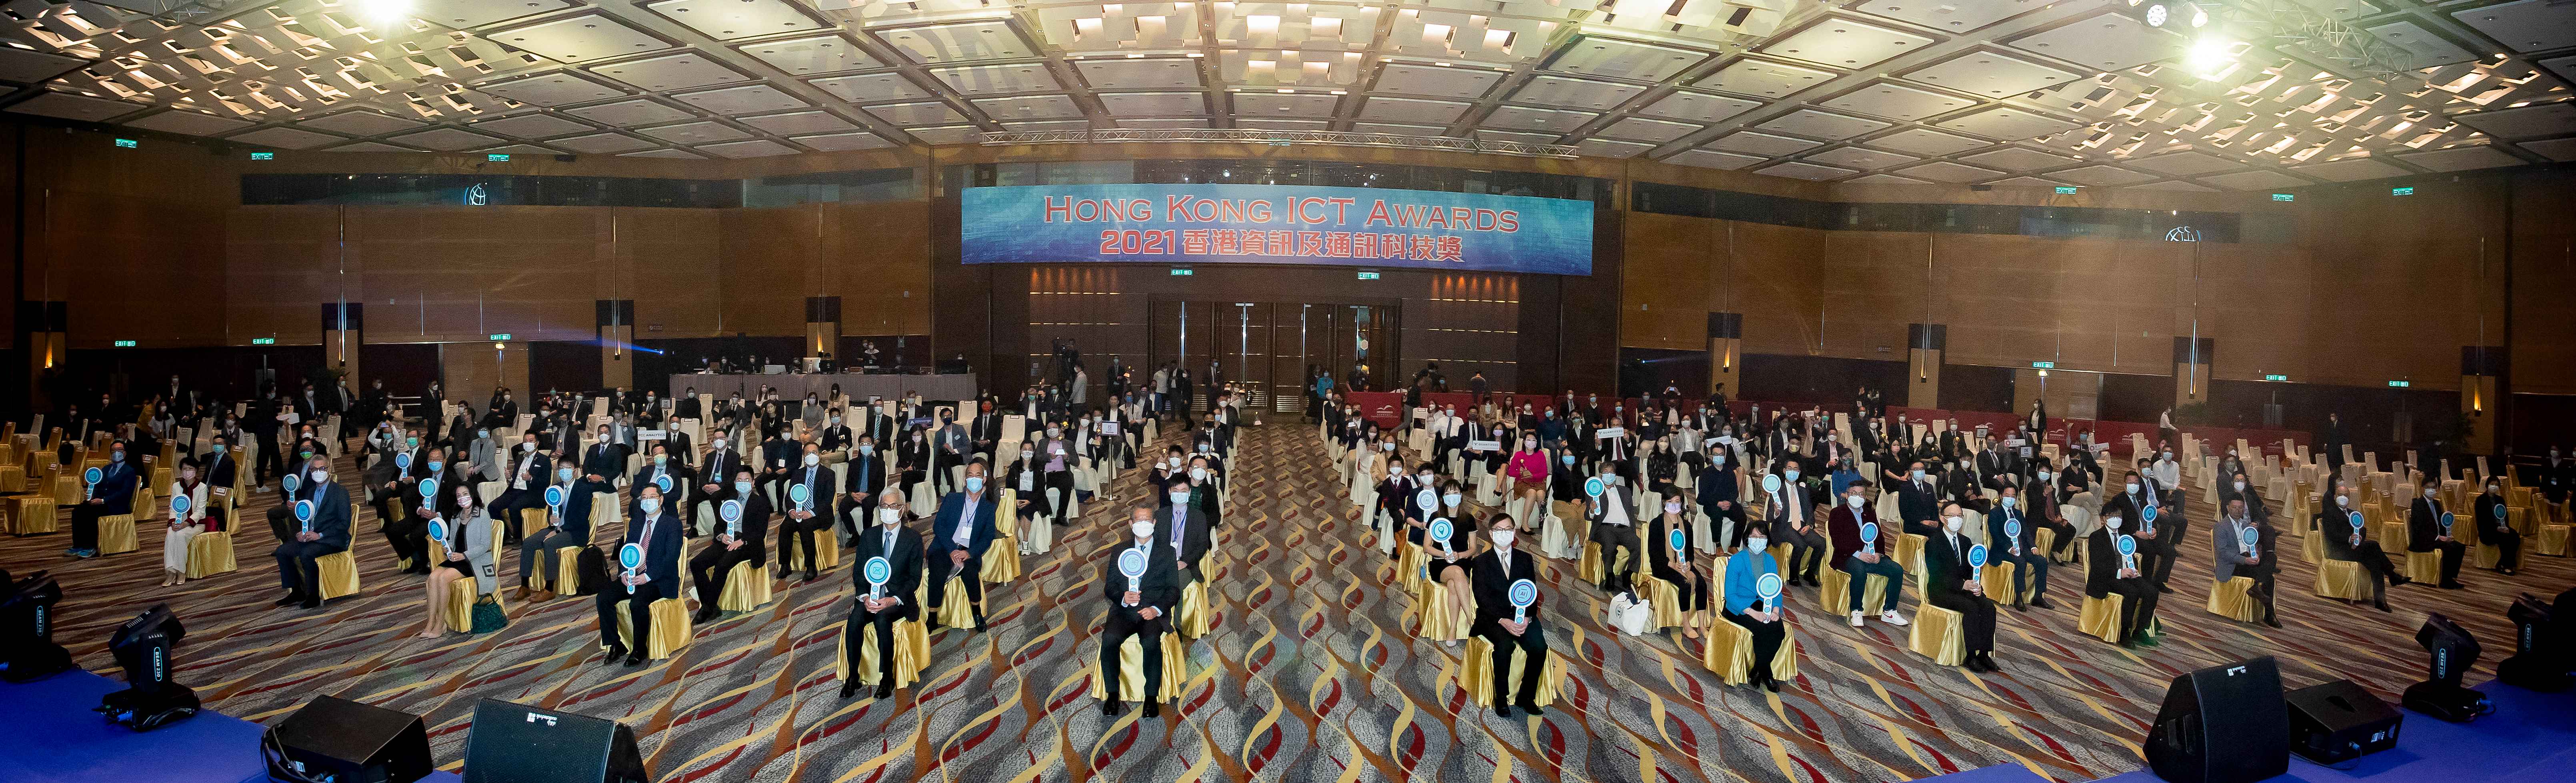 Hong Kong ICT Awards 2021 Awards Presentation Ceremony Big Group Photo